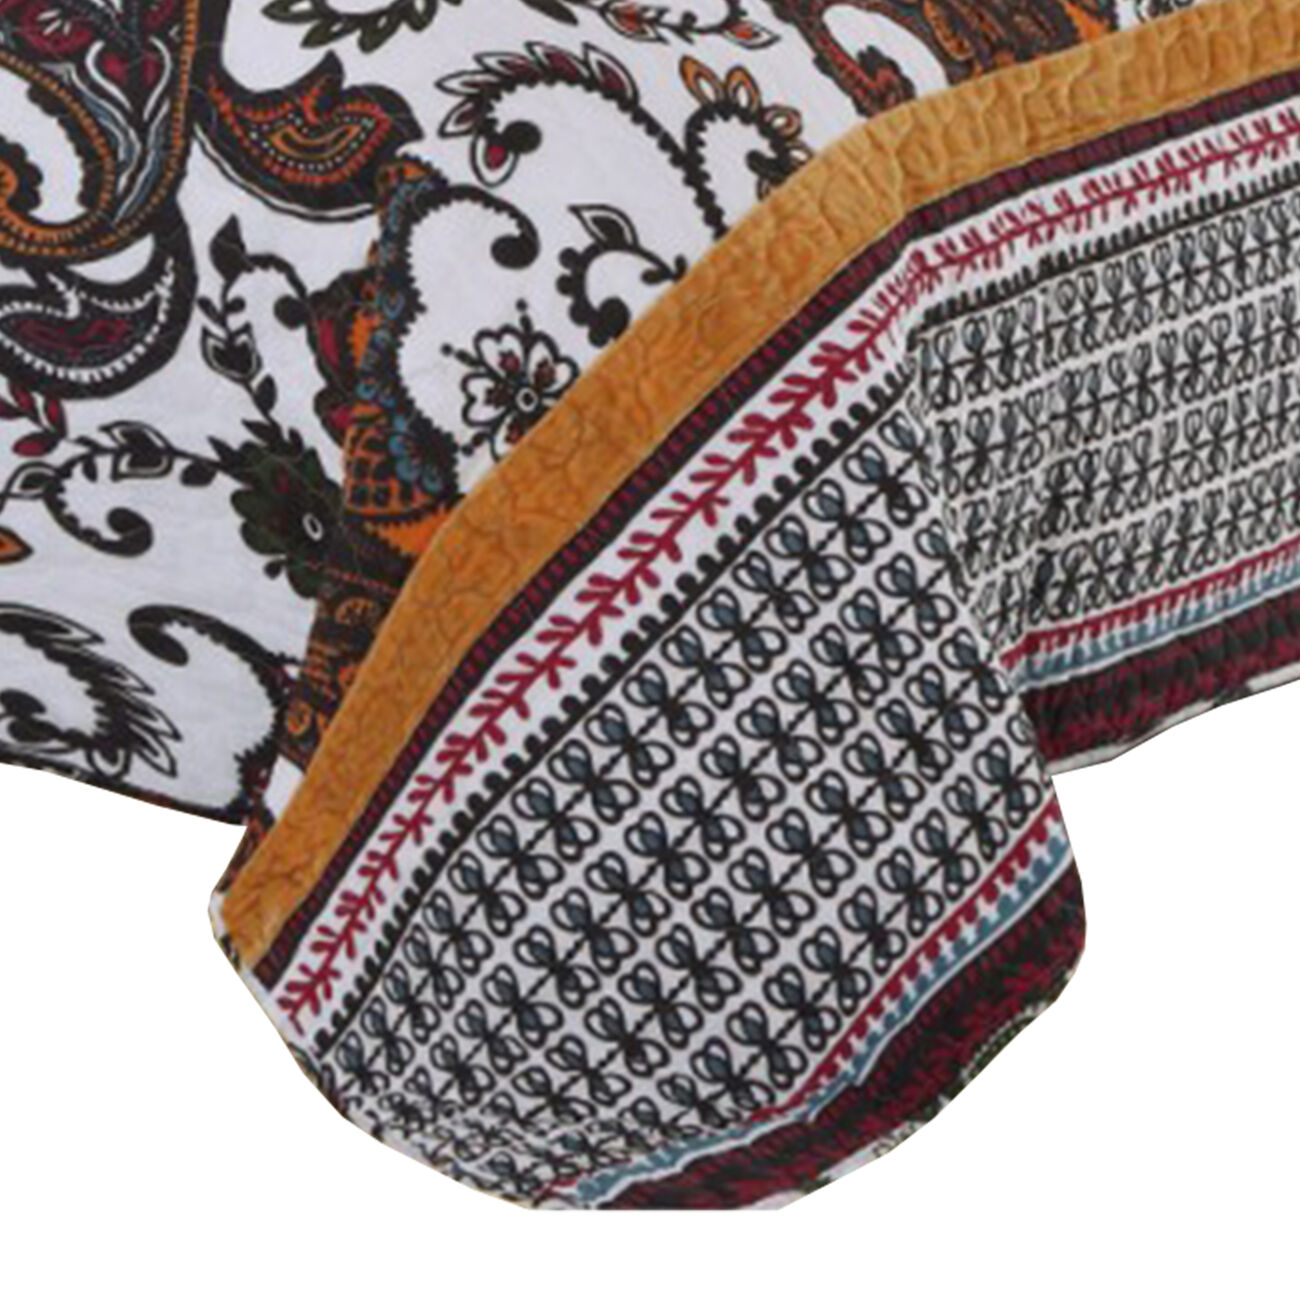 Detroit Fabric 3 Piece King Size Quilt Set with Tribal Motifs, Multicolor